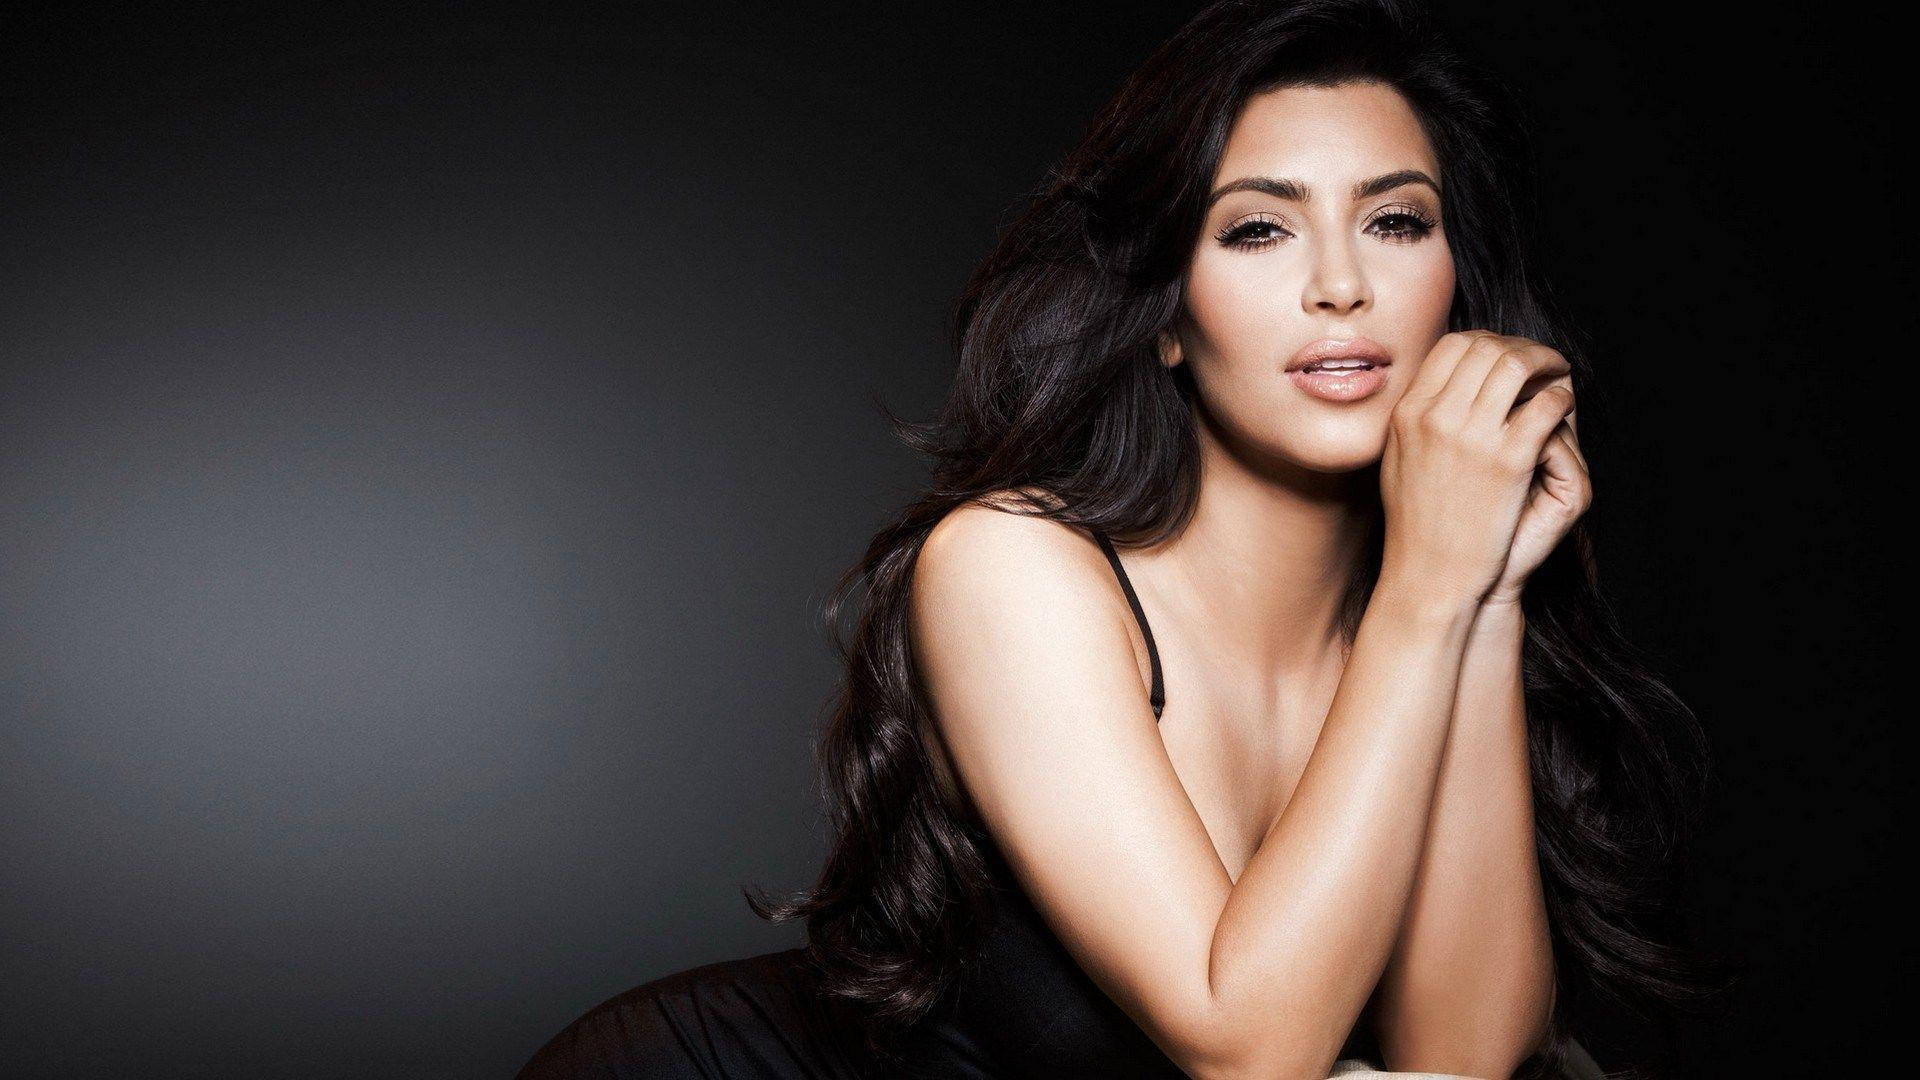 Elegant Kim Kardashian Poses In The Dark Background